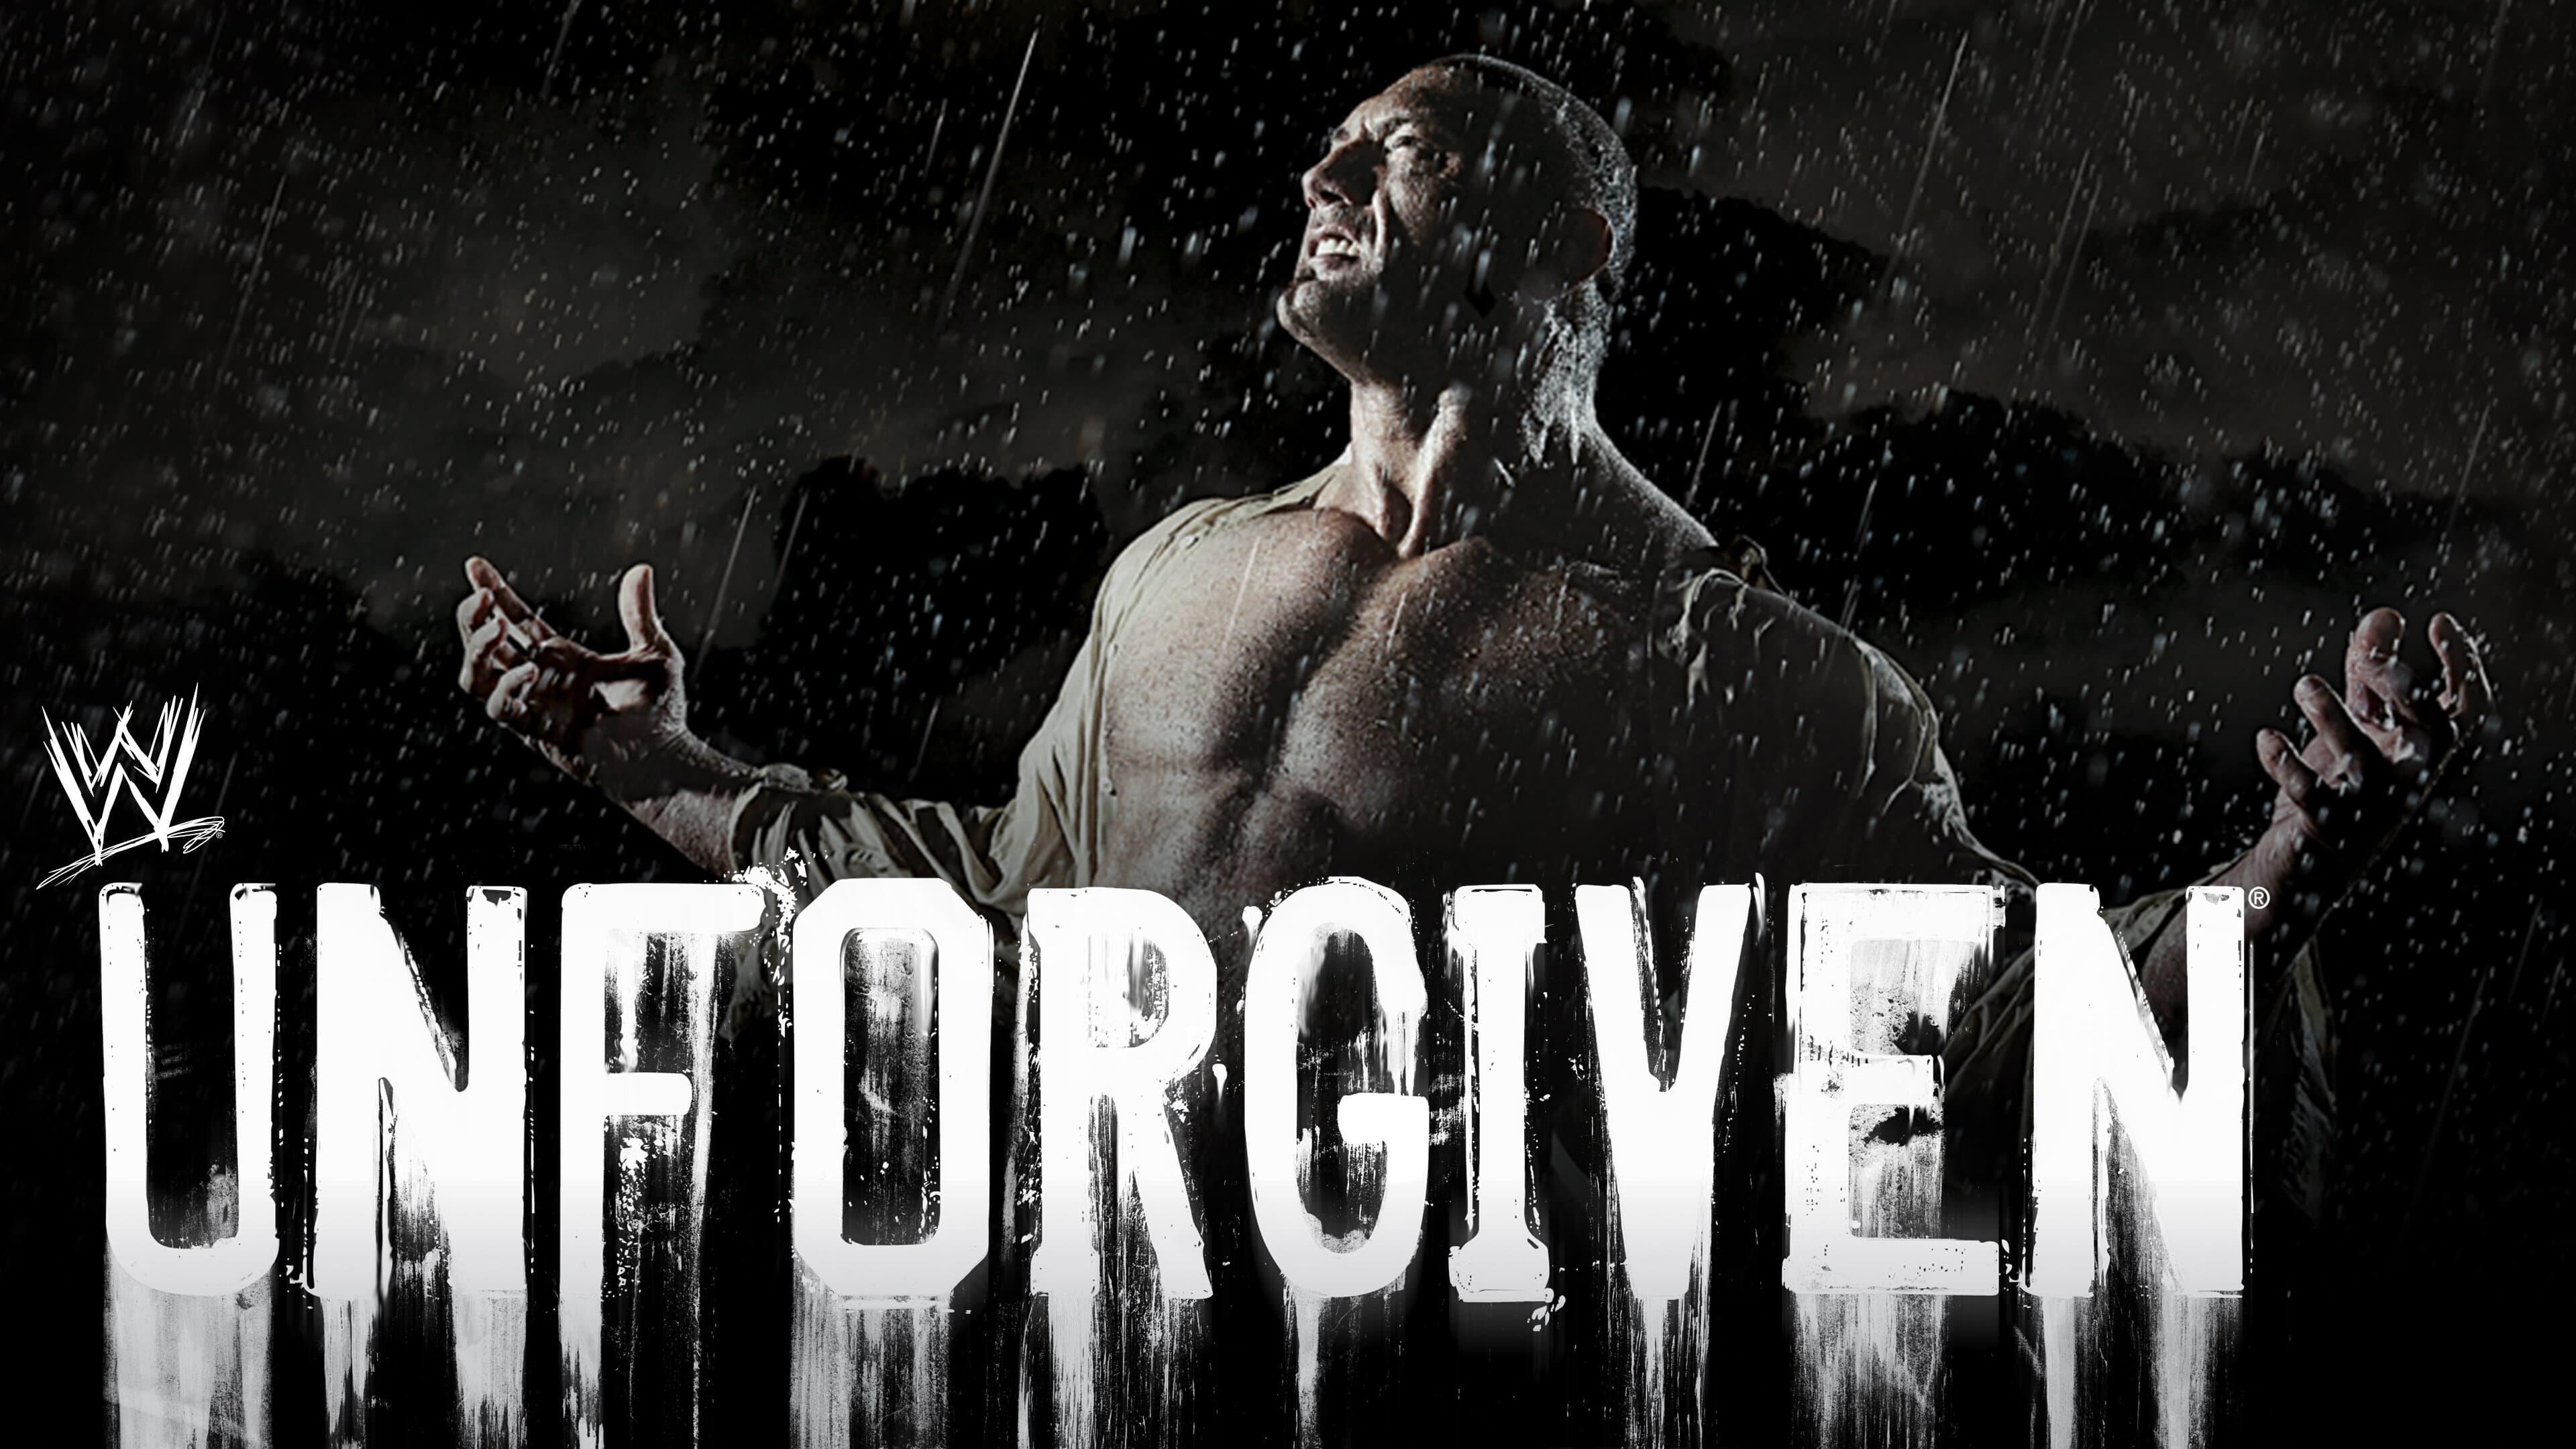 WWE Unforgiven 2008 backdrop